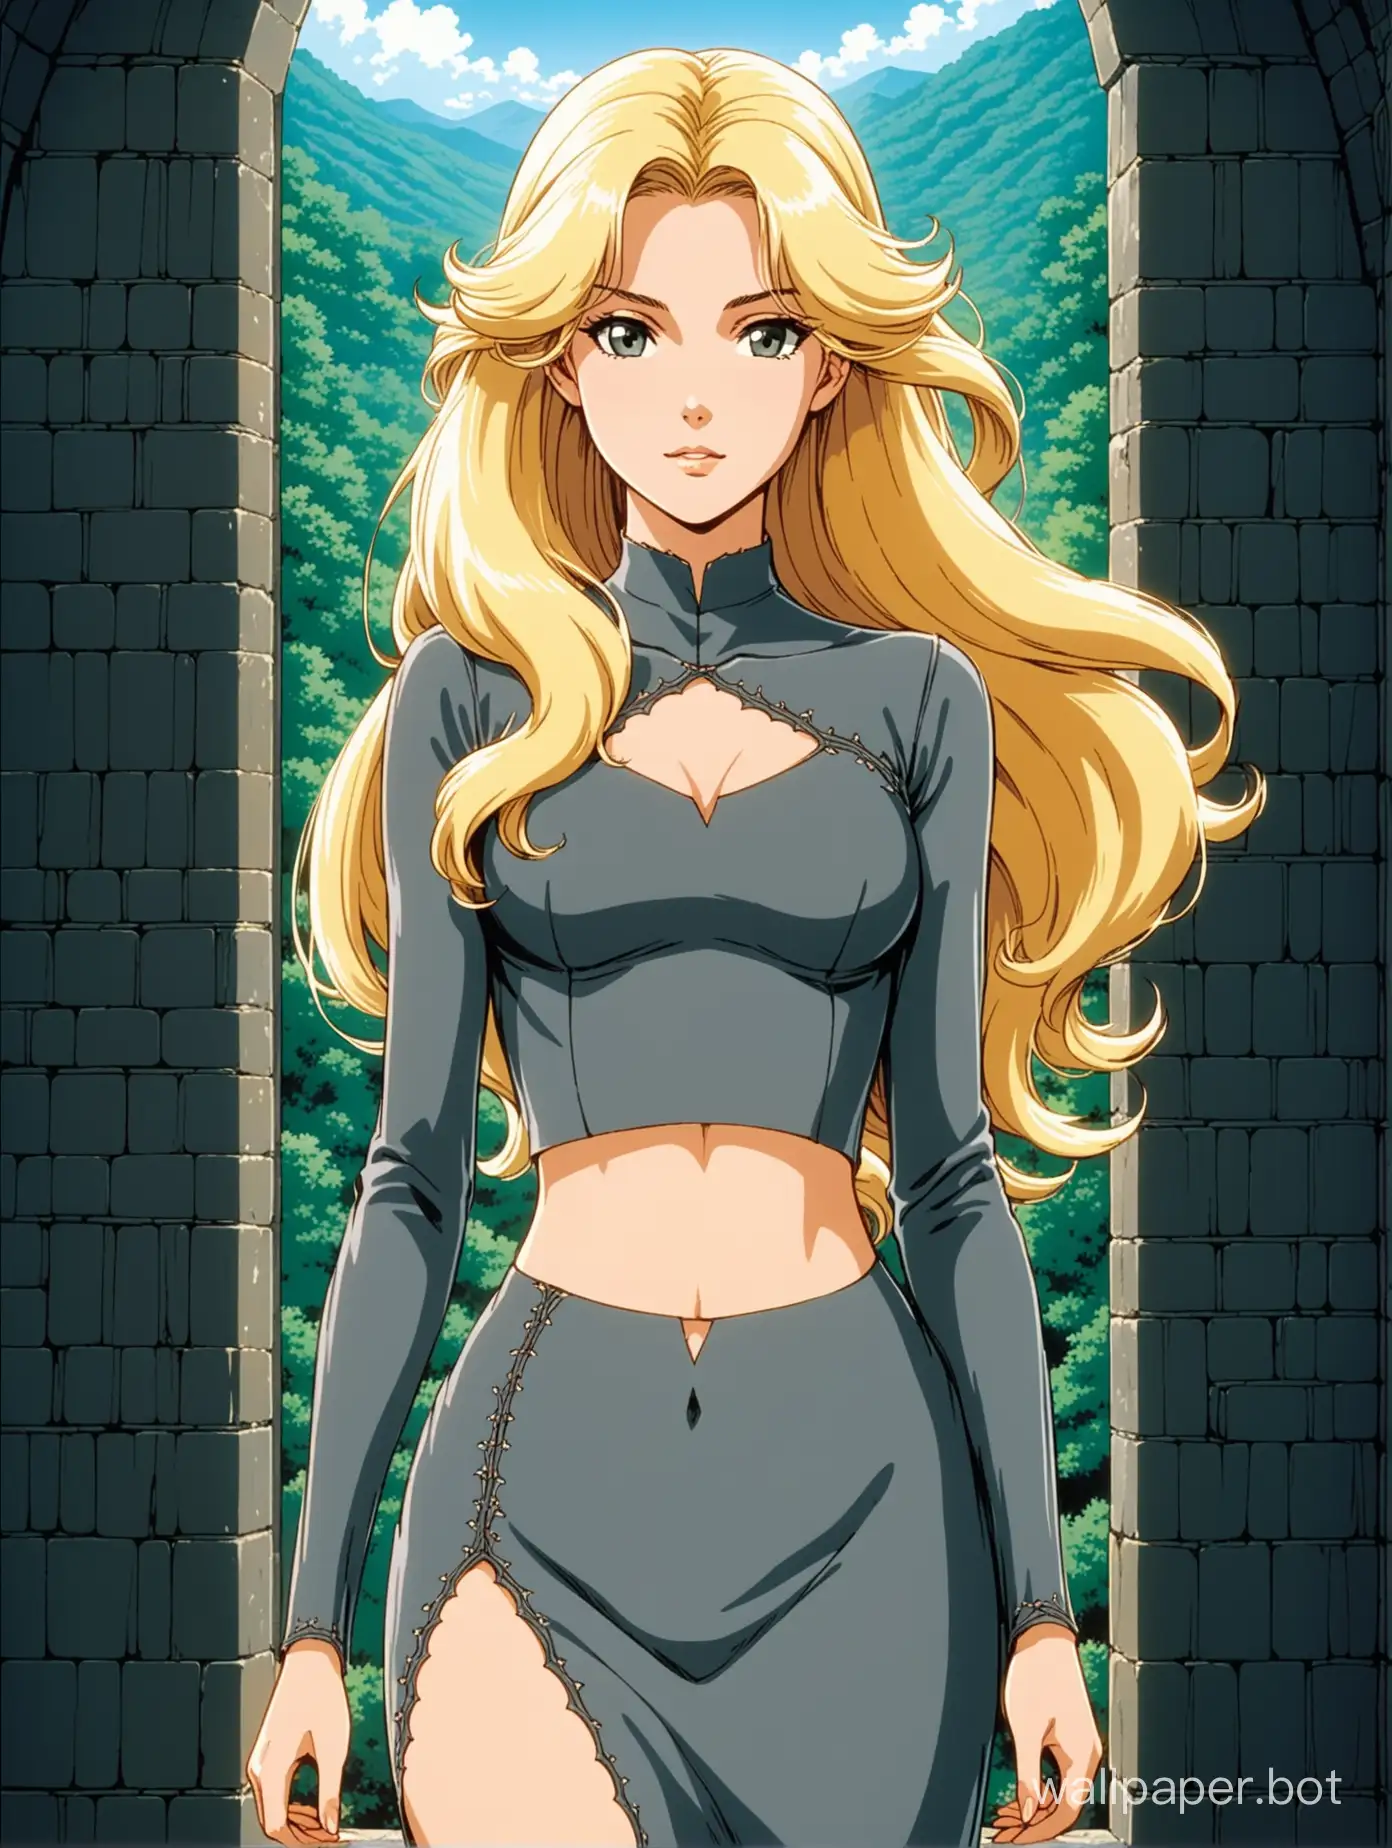 Elegant-WhiteHaired-Woman-in-MedievalInspired-Dress-Retro-Anime-Chic